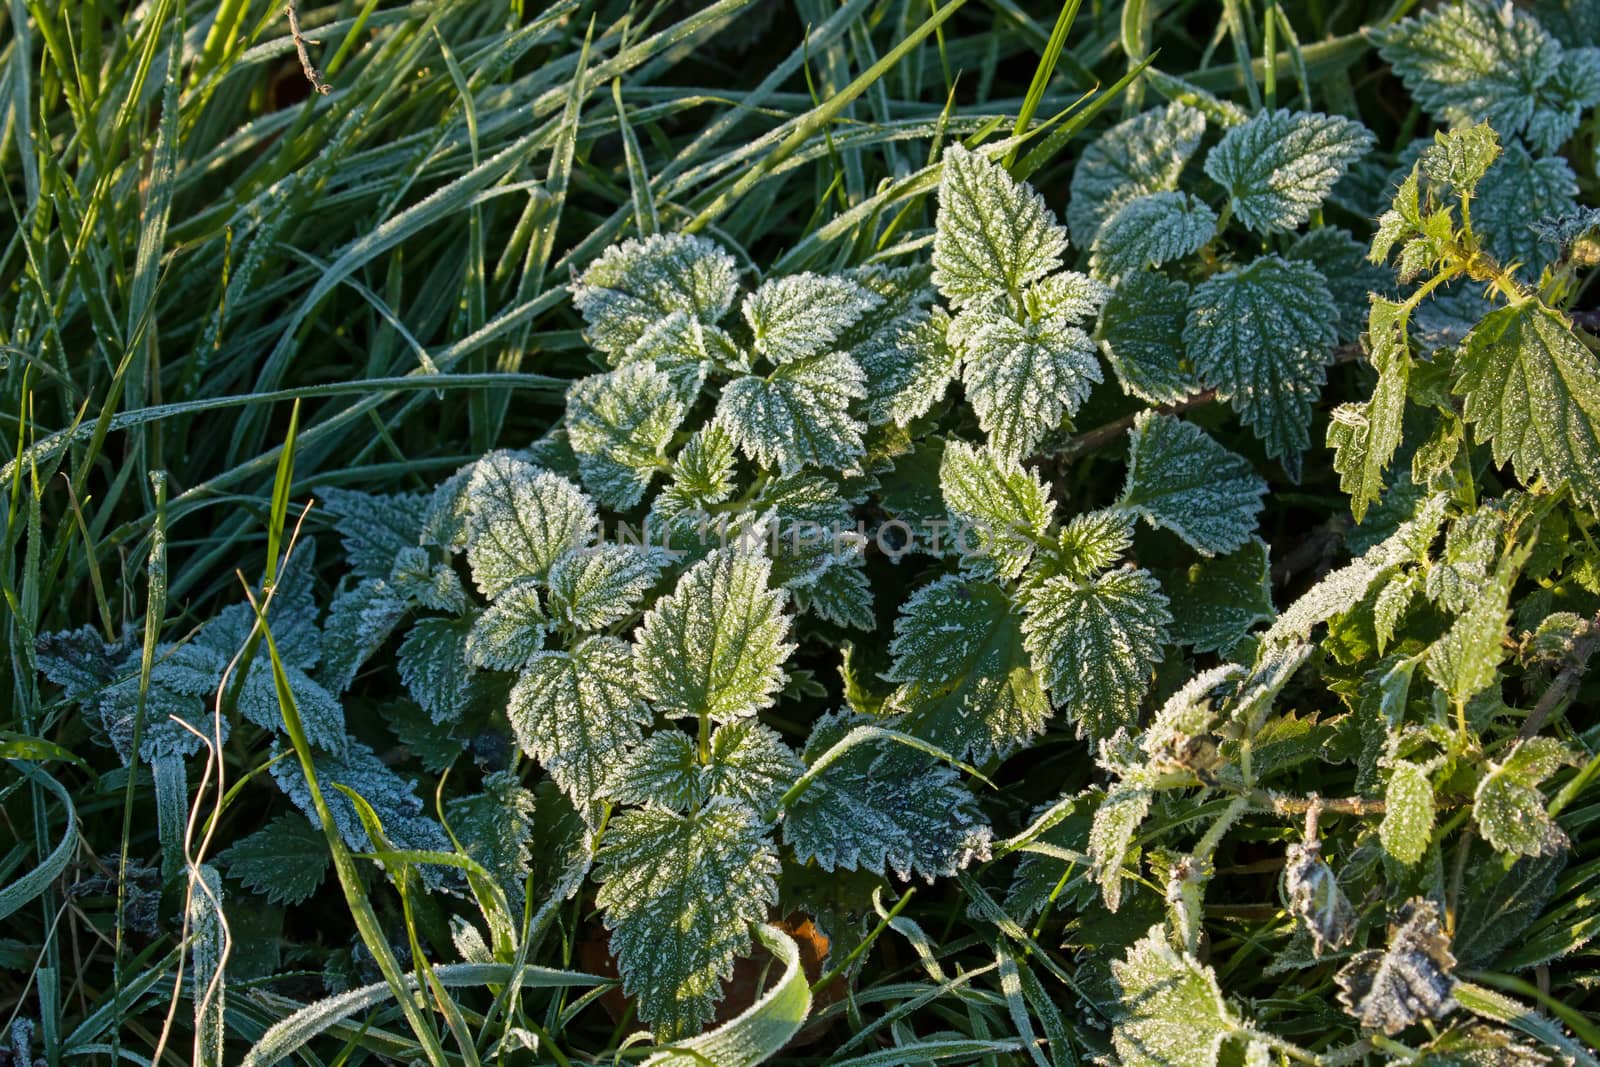 Stinging Nettles in Winter frost, glistening in sunlight.